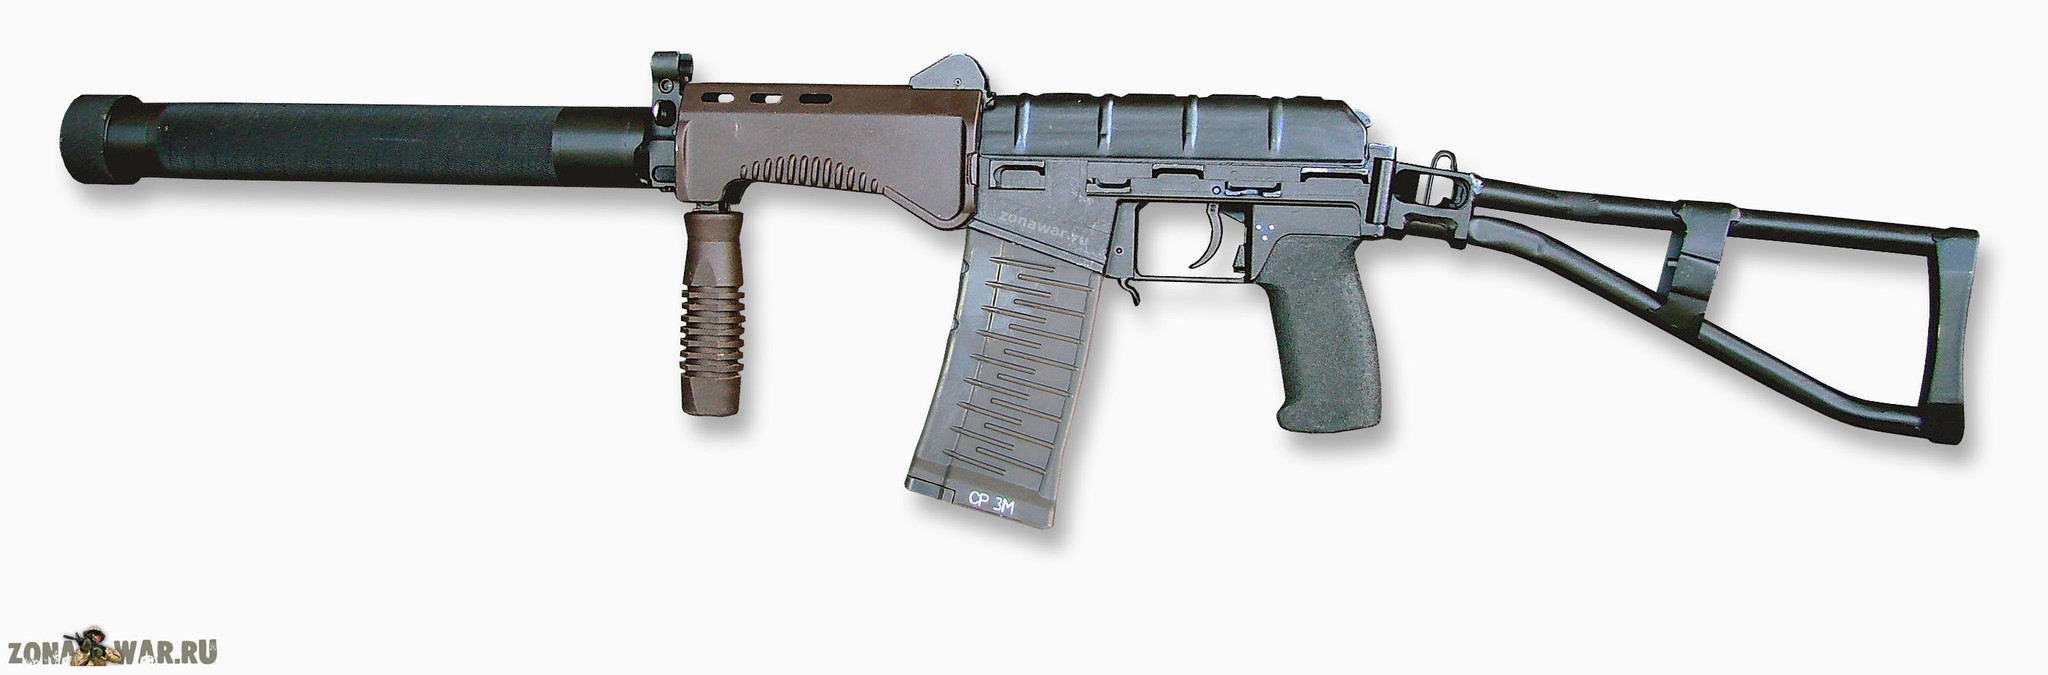 SR.3 «Vikhr» assault rifle